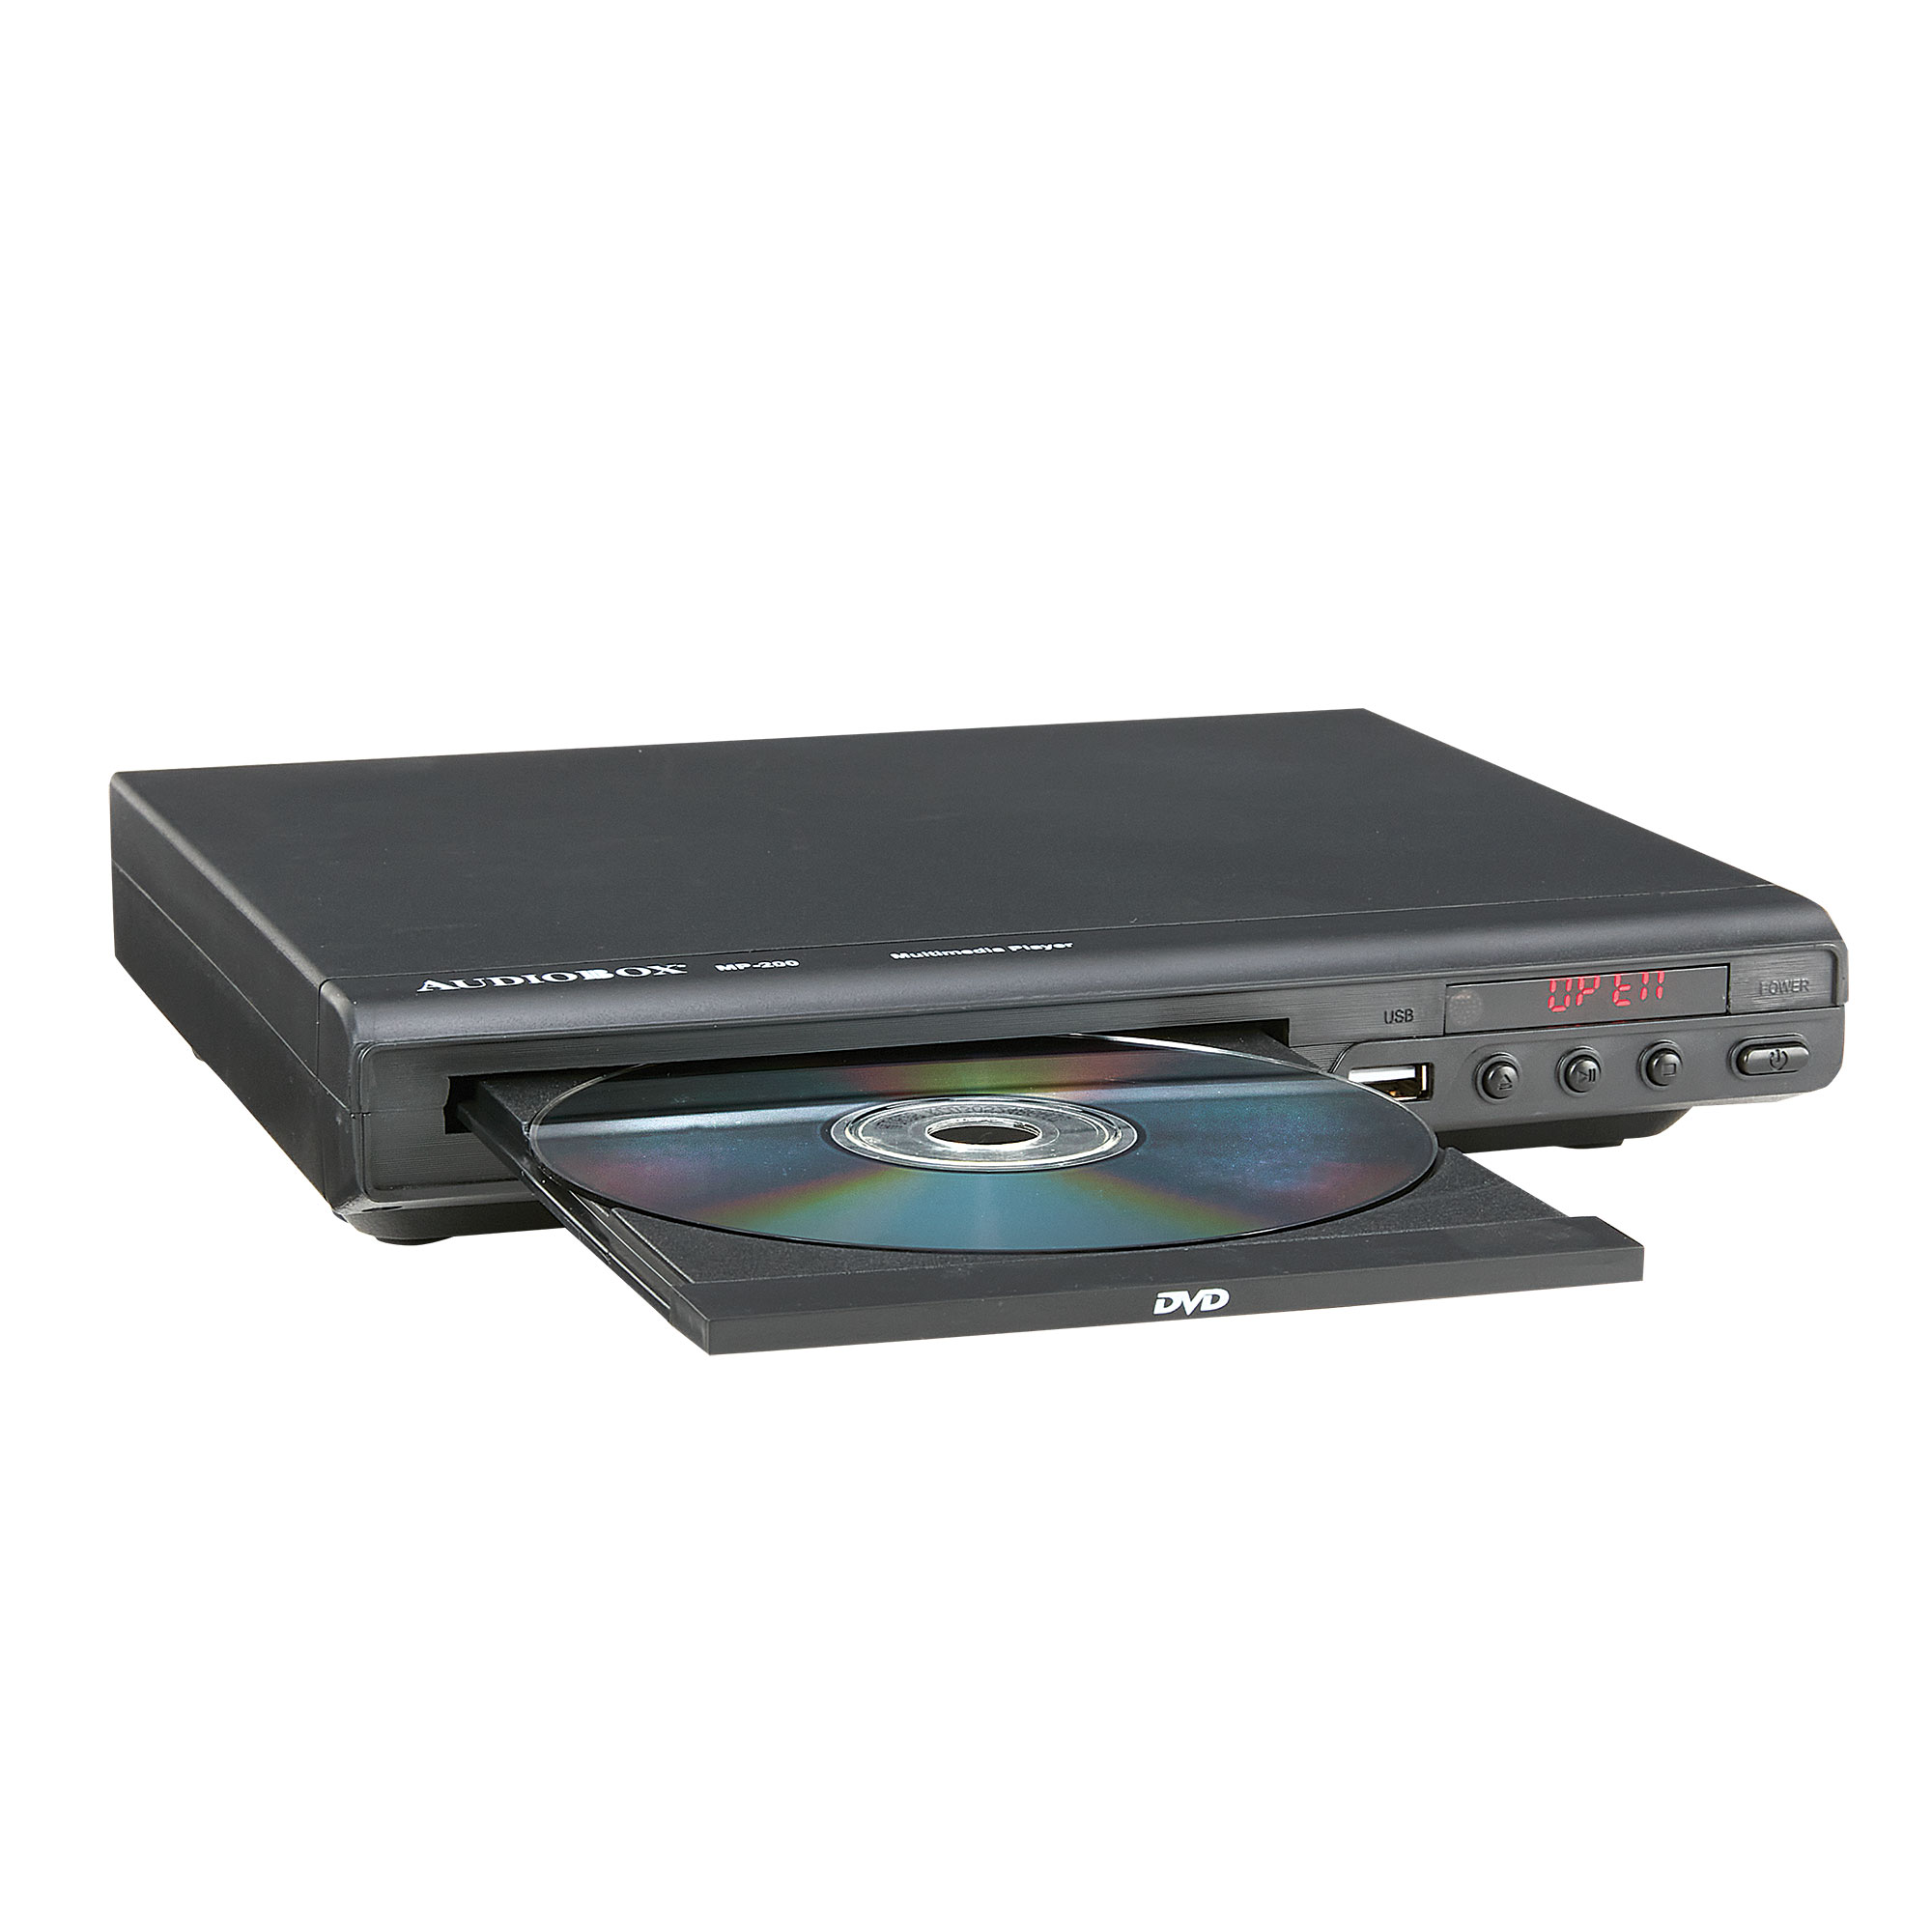 Audiobox Portable 1080p DVD Player - image 1 of 5